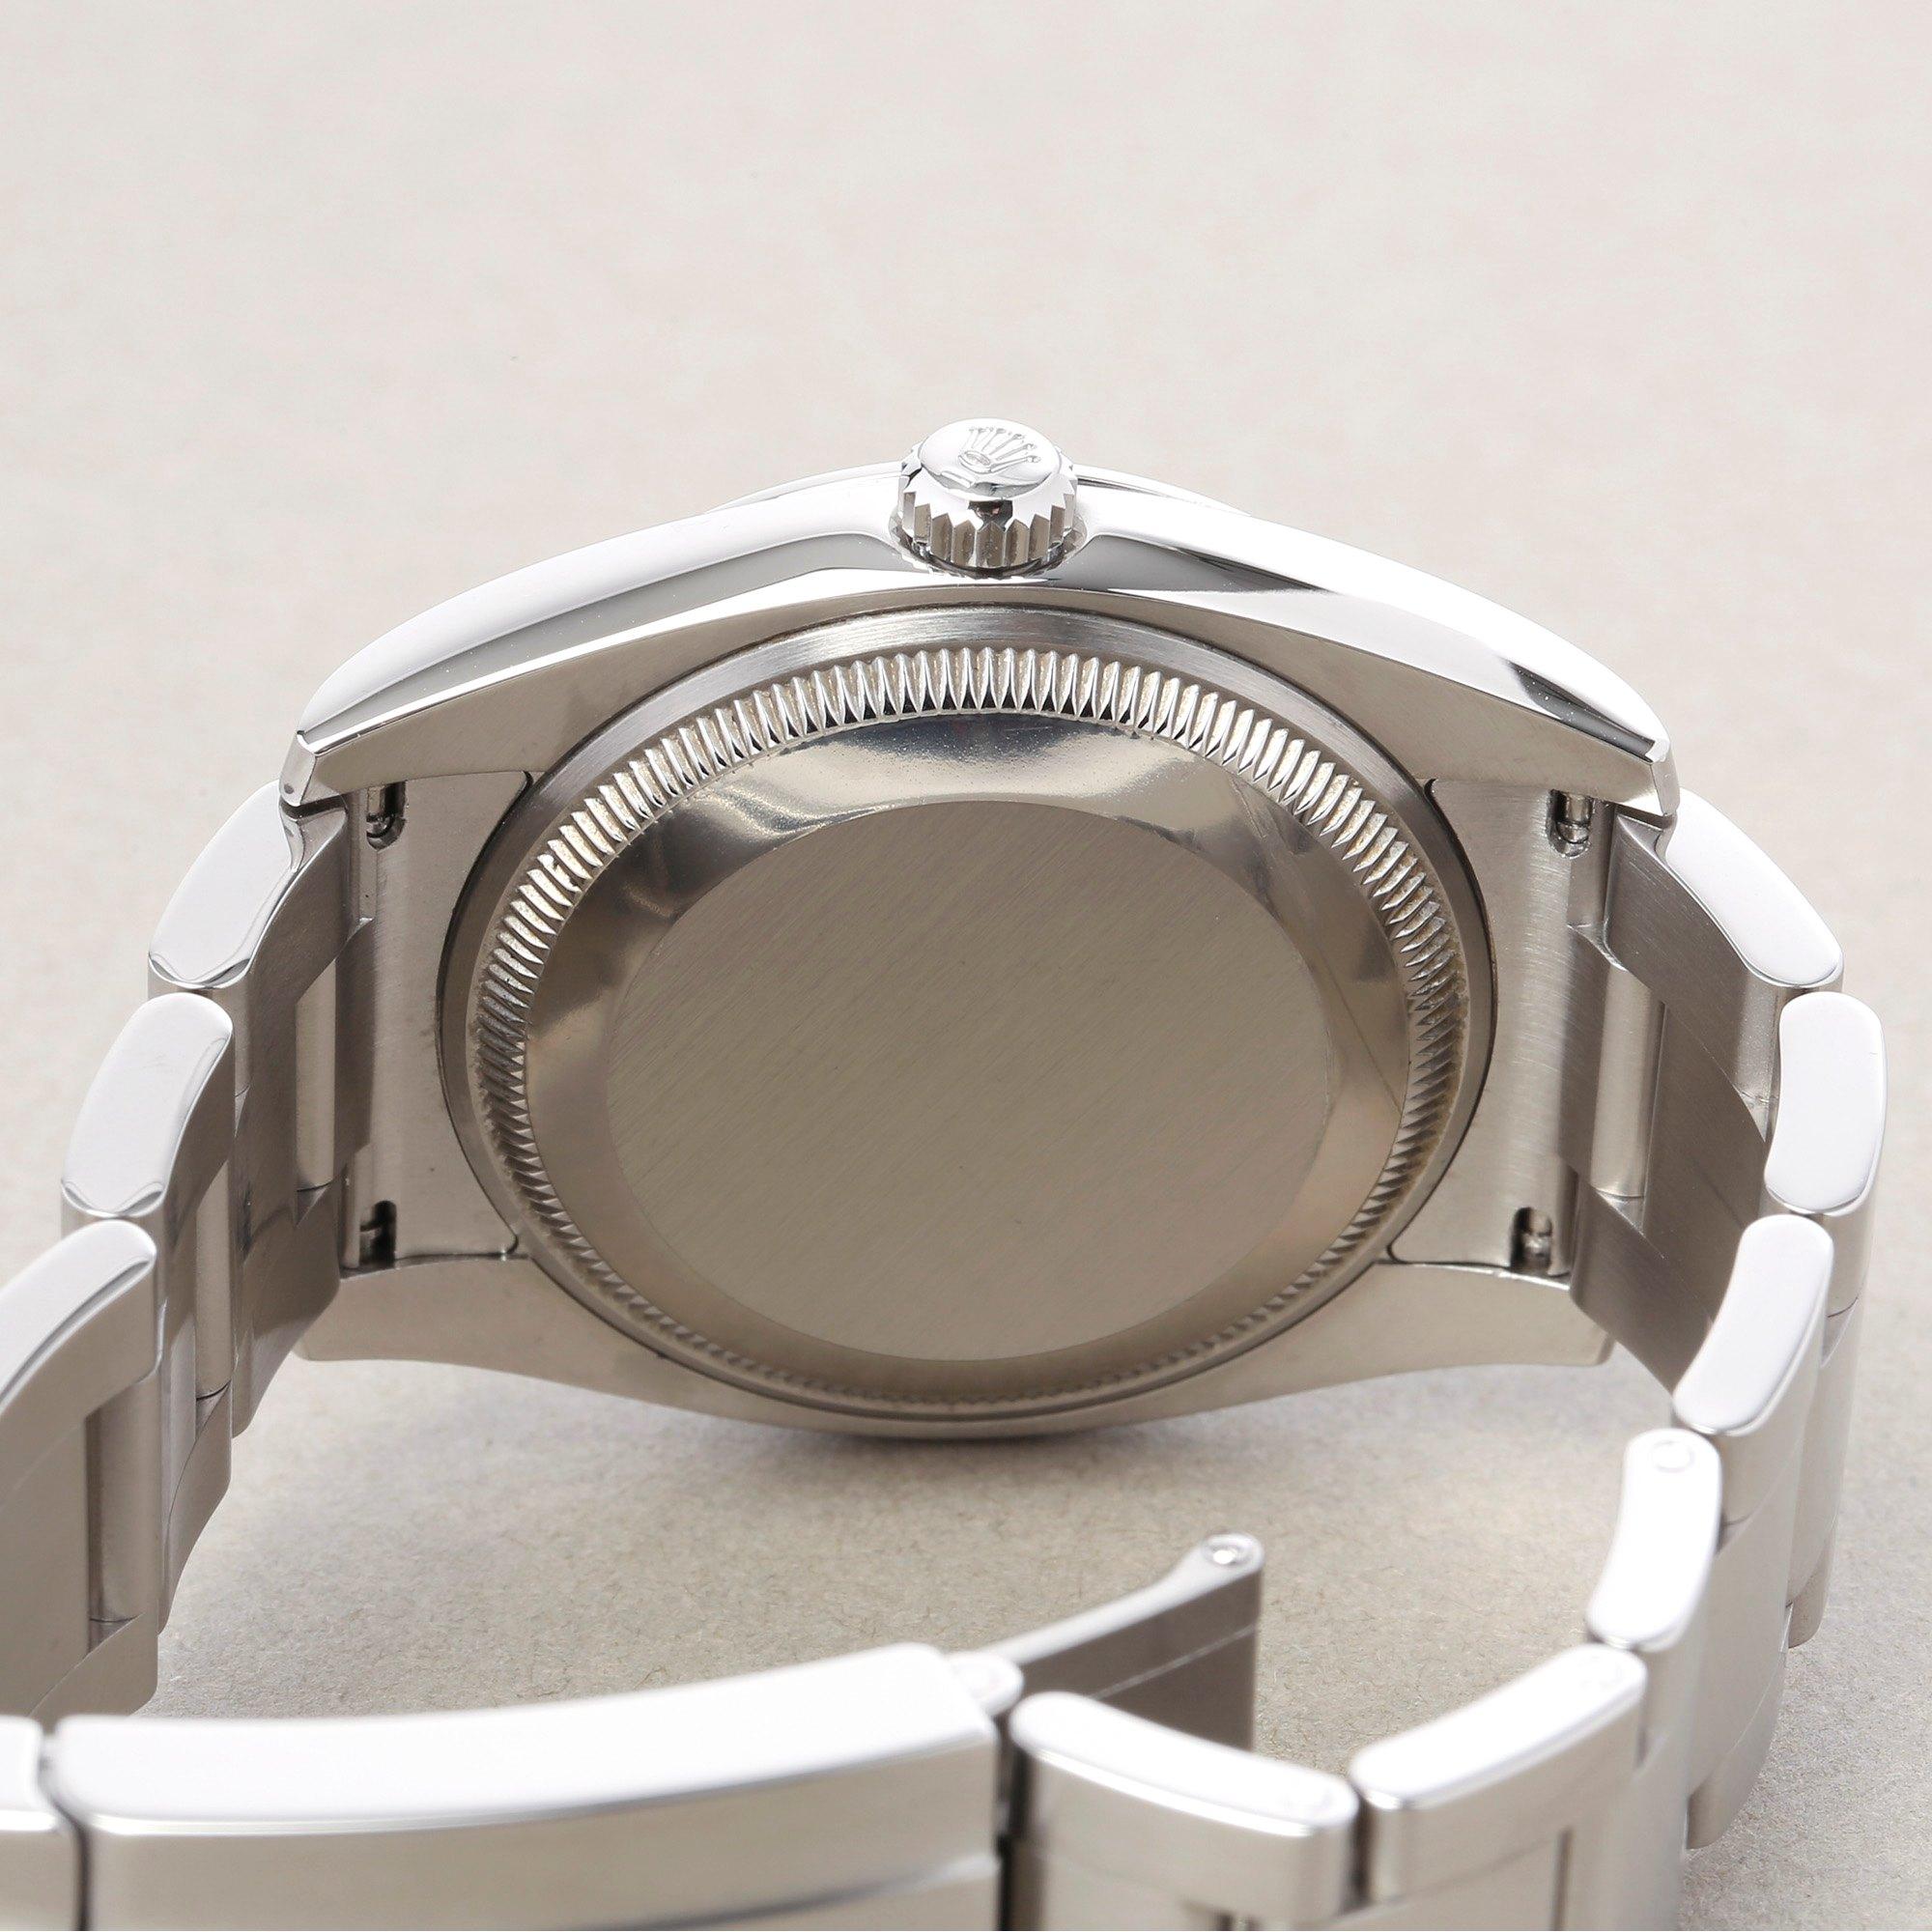 Rolex Air-King 114200 Unisex Stainless Steel Watch 4